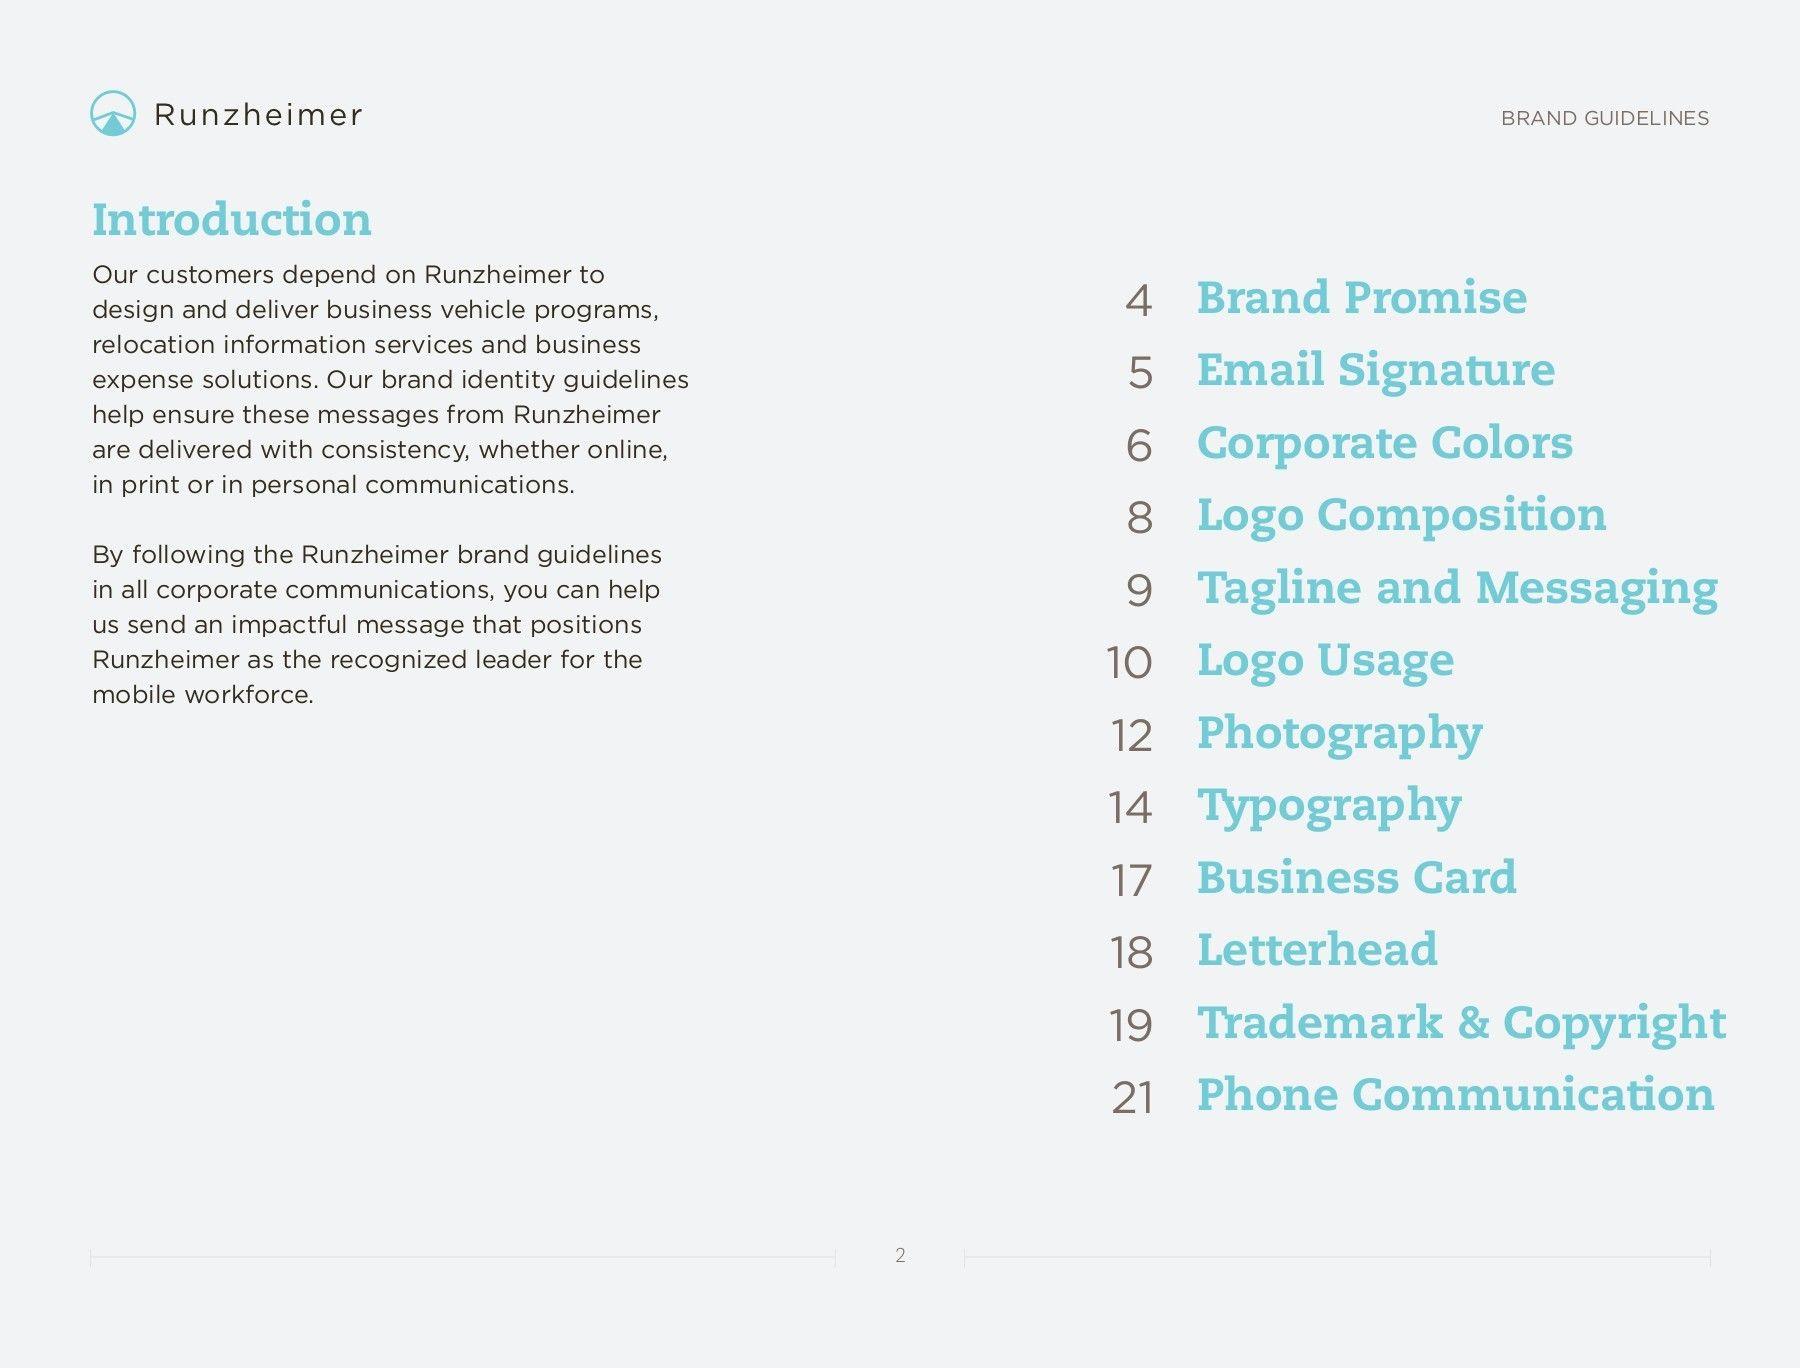 Runzheimer Logo - Runzheimer Brand Guidelines Pages 1 - 20 - Text Version | FlipHTML5